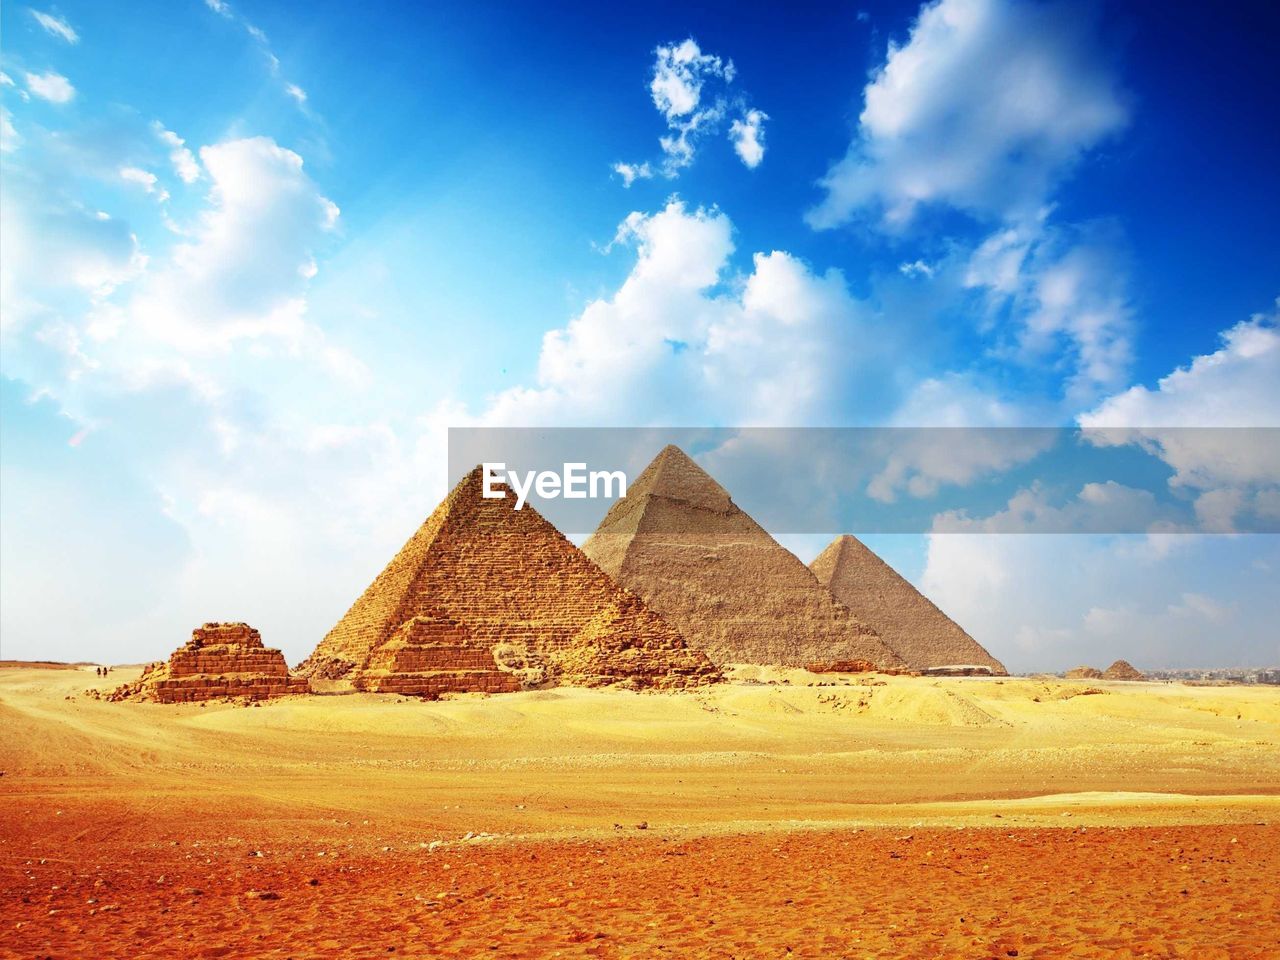 Pyramids in desert against cloudy sky